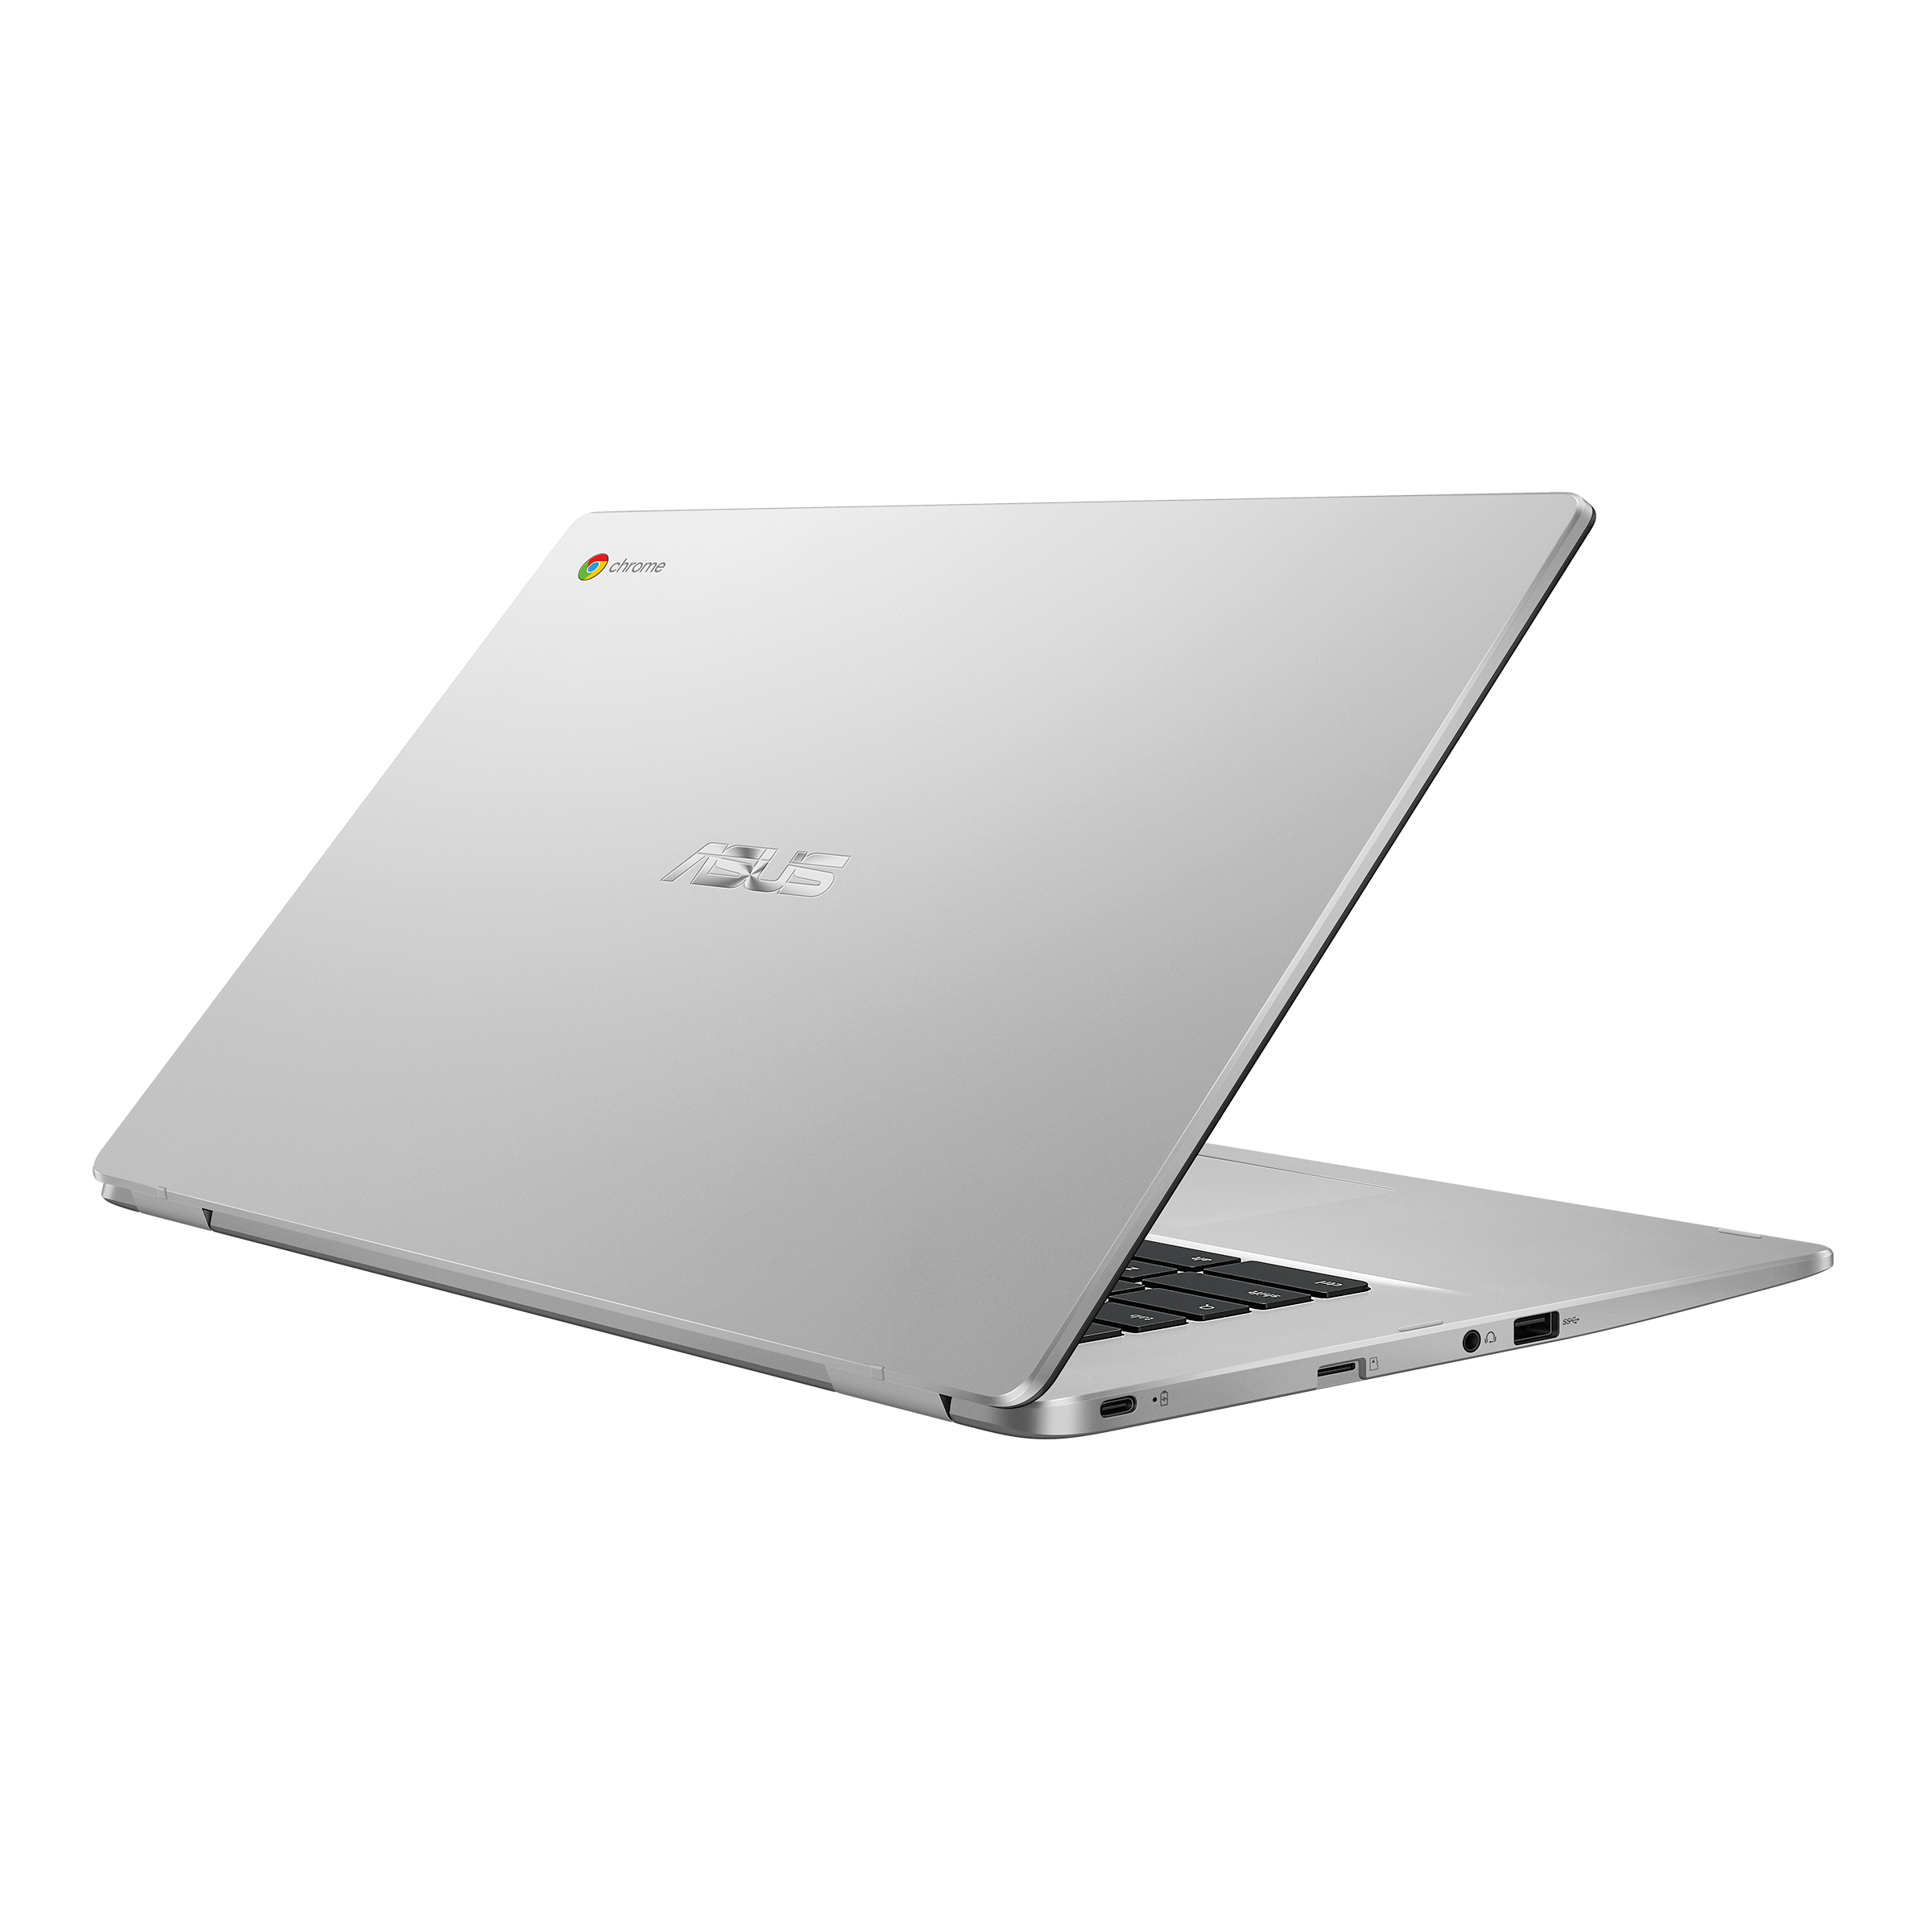 ASUS Chromebook C523｜Laptops For Work｜ASUS Global